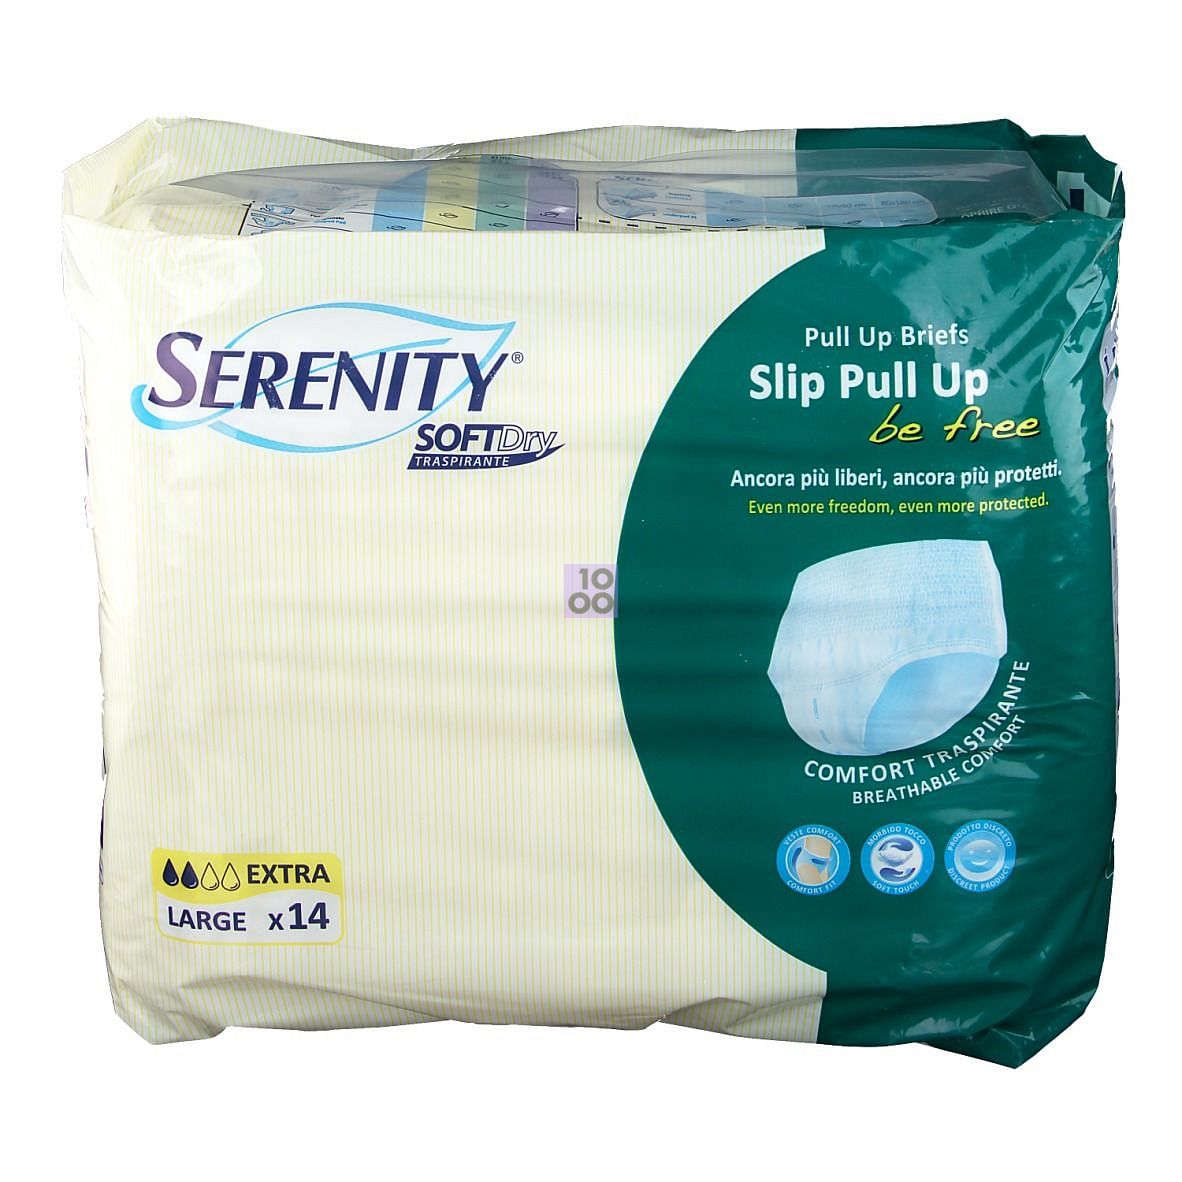 Serenity Soft Dry Pull Up Be Free Super Taglia Large 10 Pezzi